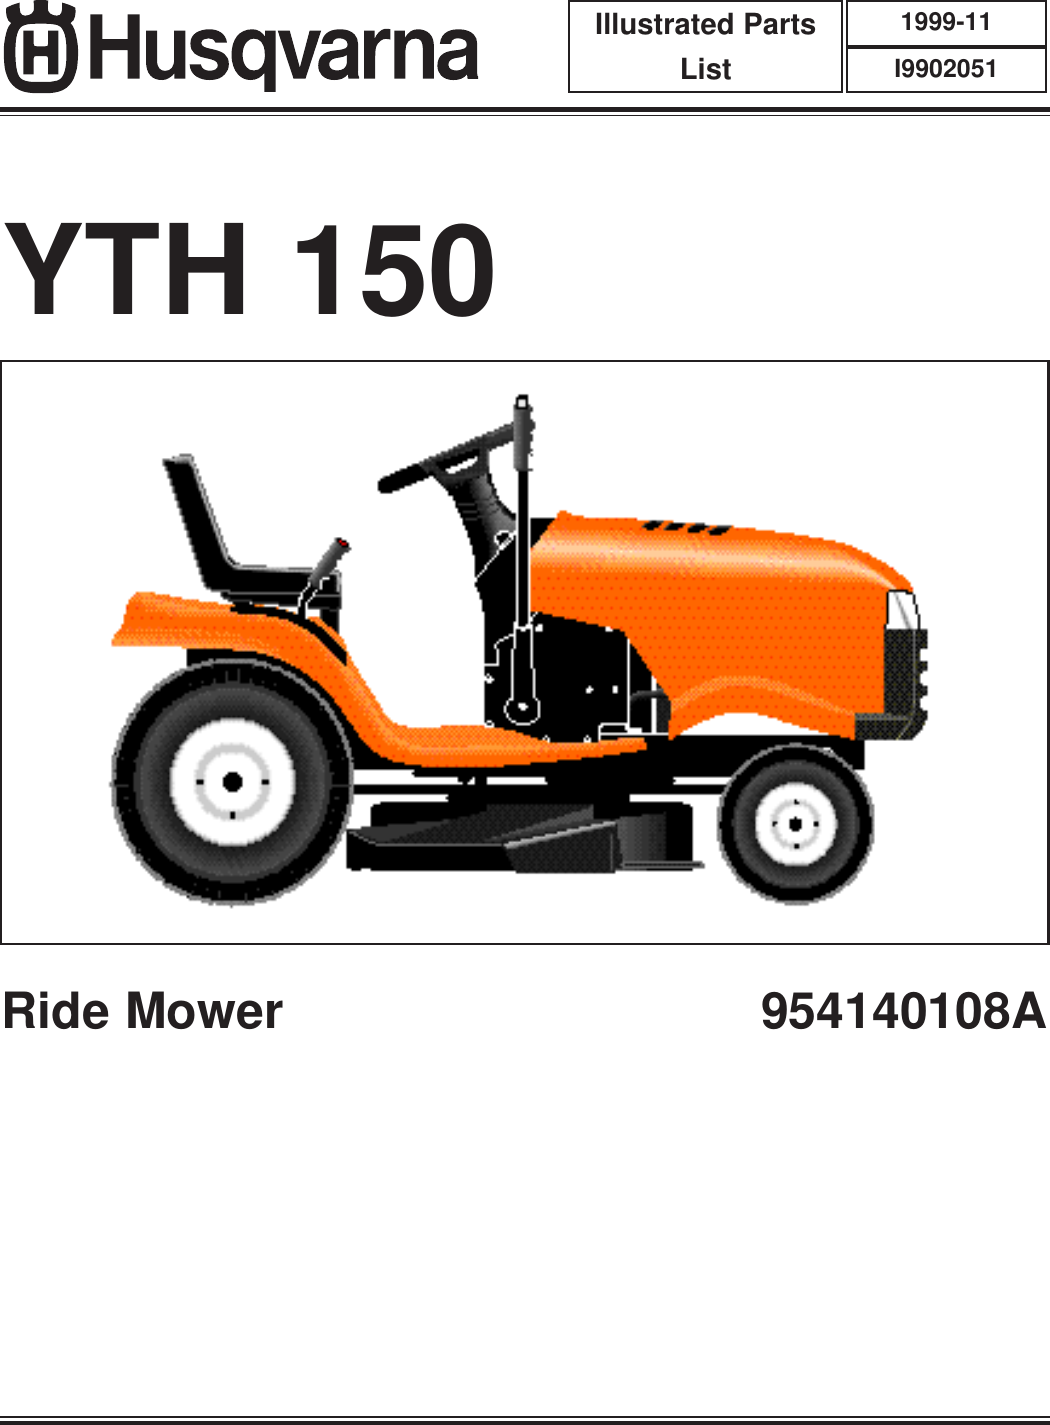 Husqvarna Lawn Mower Yth 150 Users Manual IPL, 150, 954140108A, 1999 11